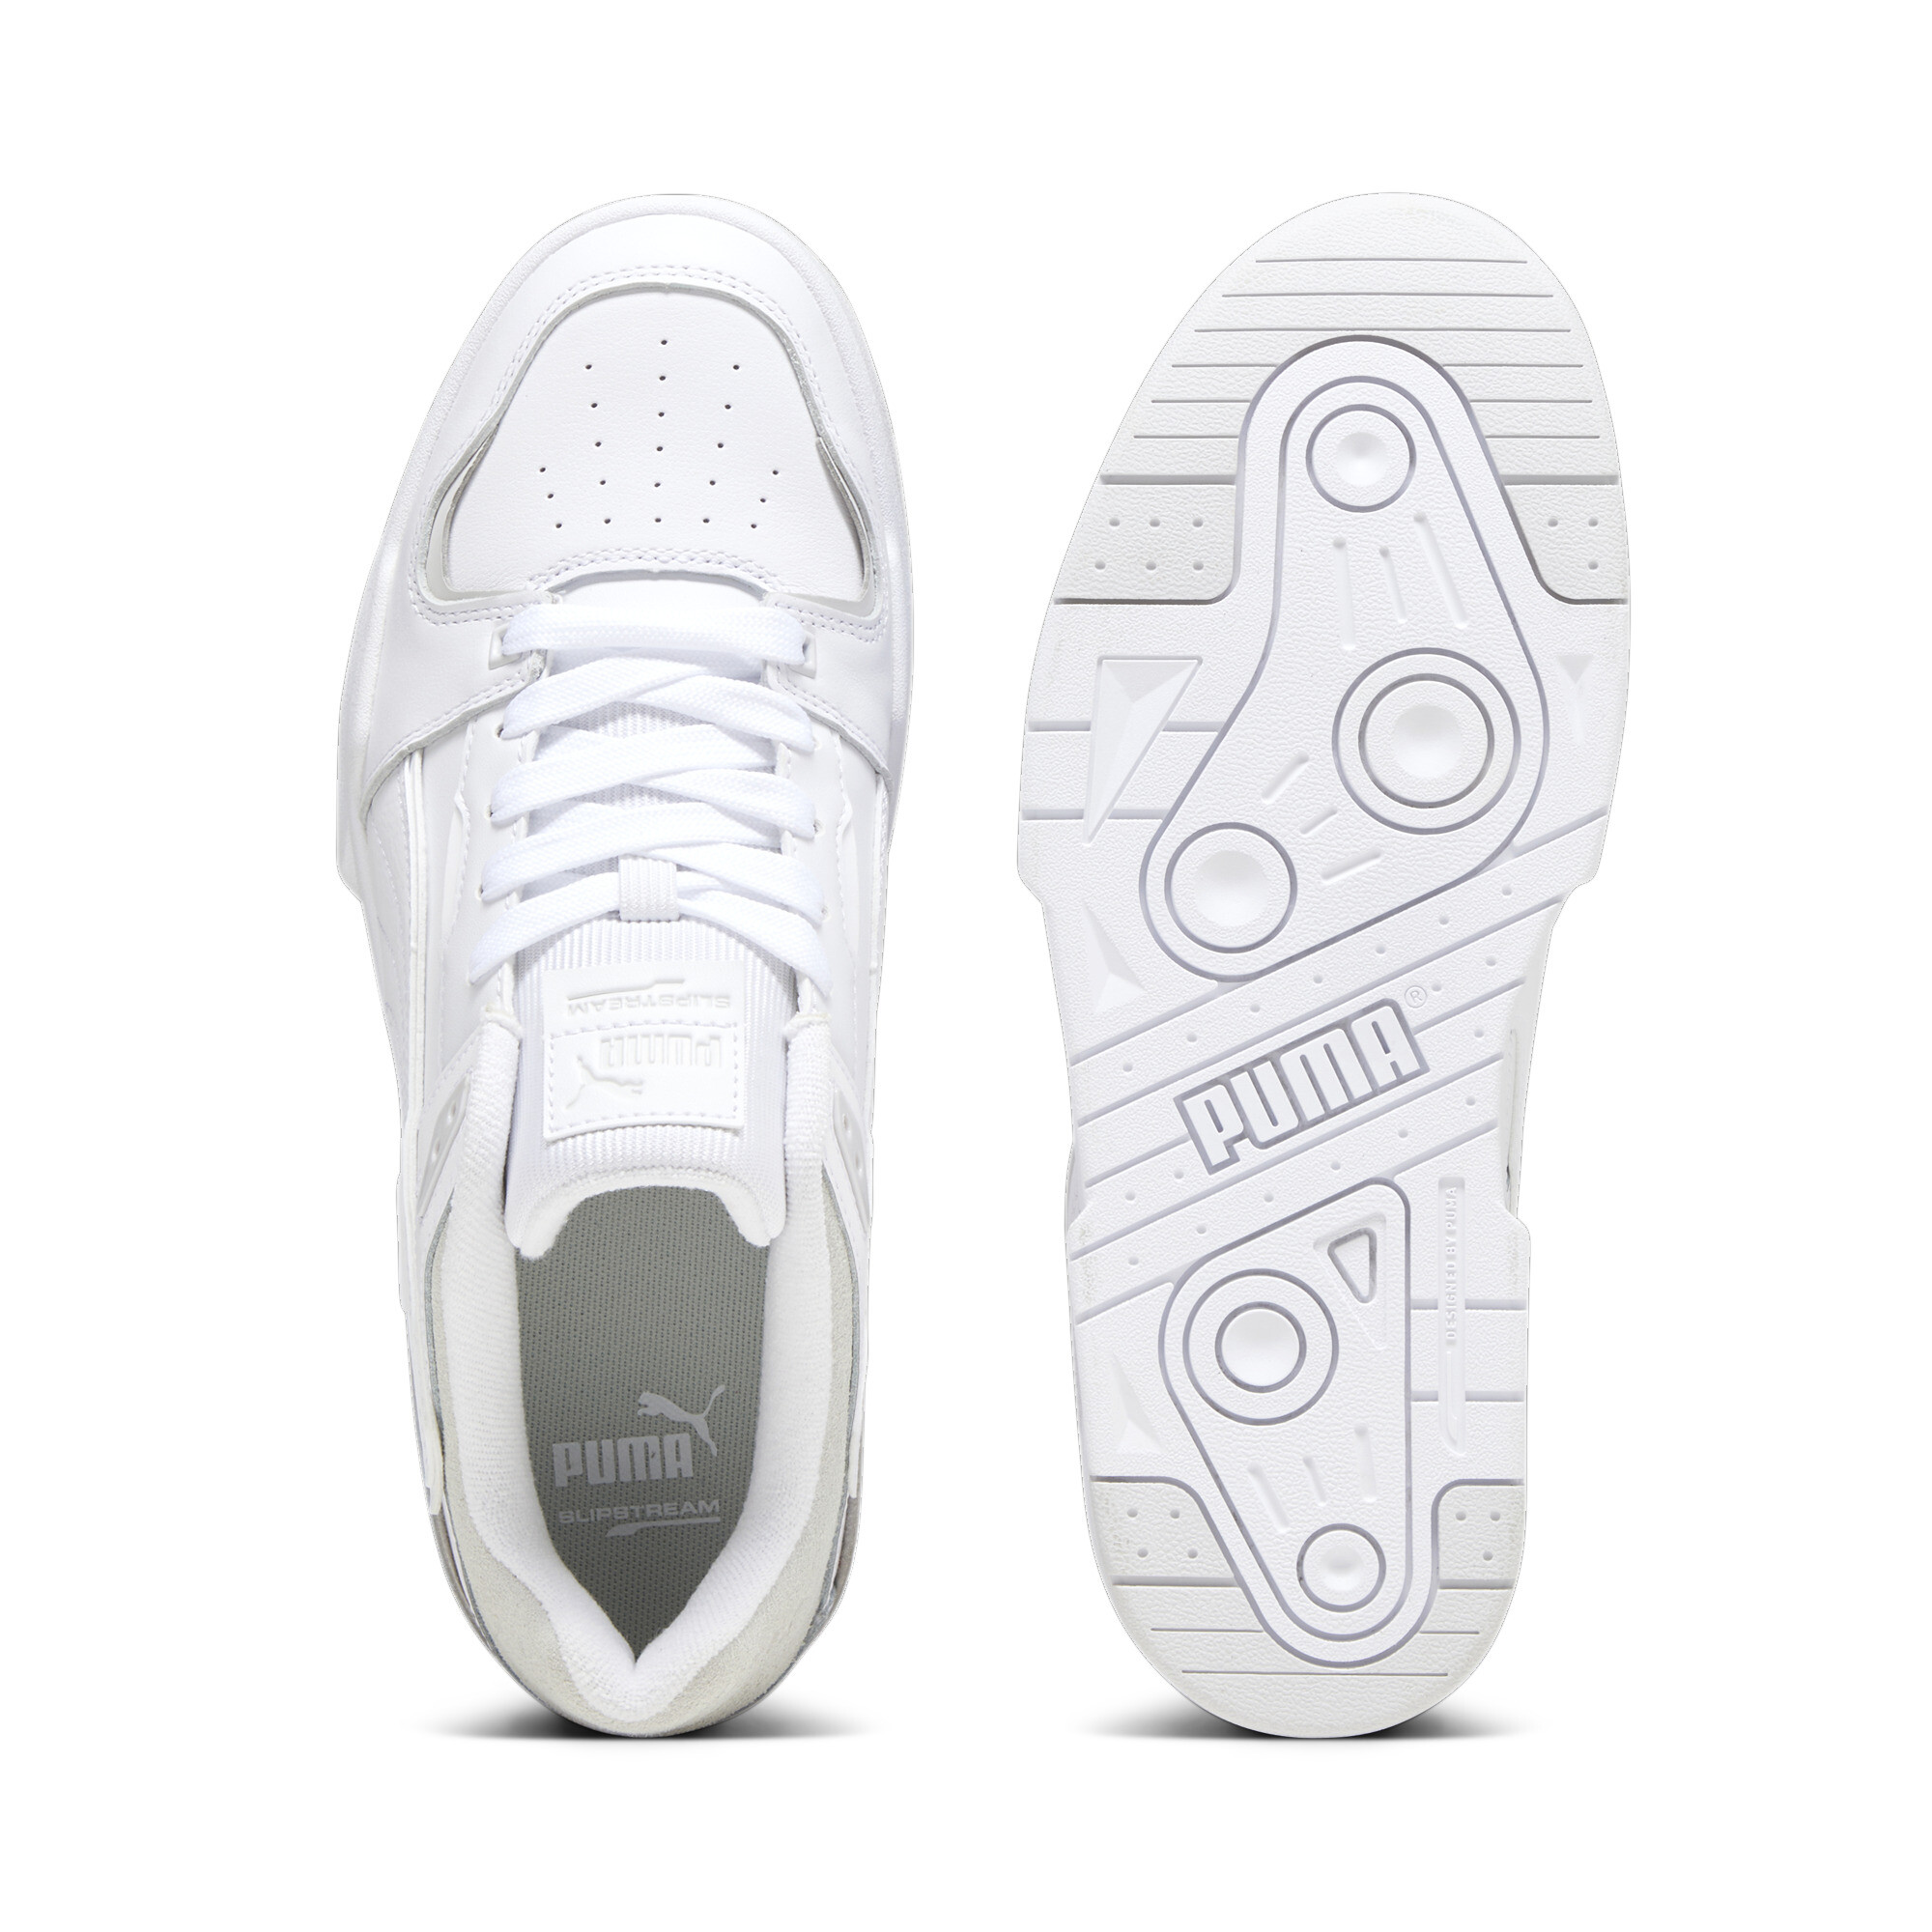 Men's PUMA Slipstream Bball Sneakers In White, Size EU 37.5